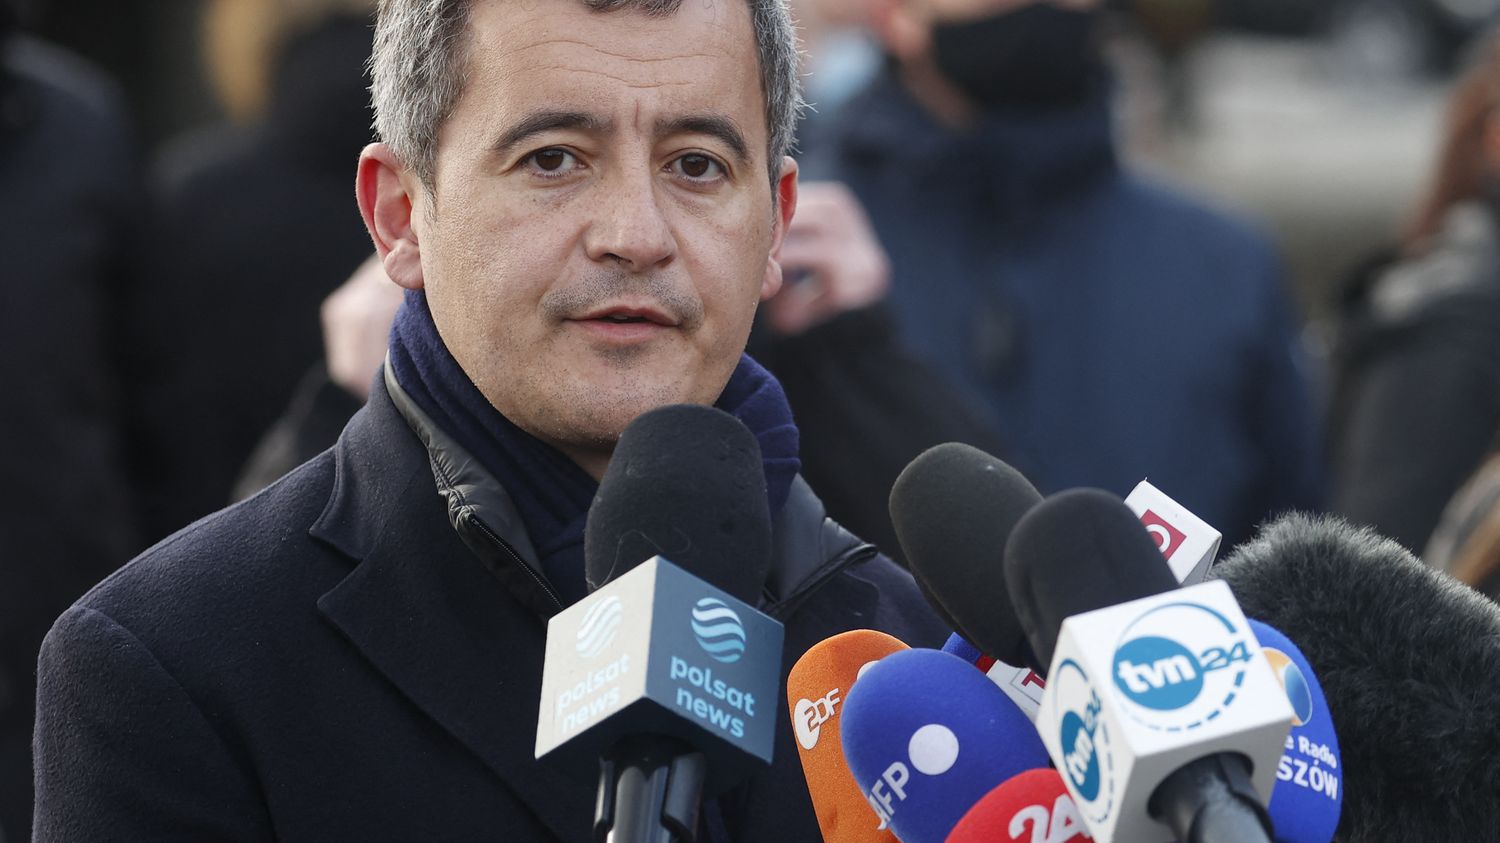 France will welcome 2,500 Ukrainian refugees in Moldova, announces Gérald Darmanin
